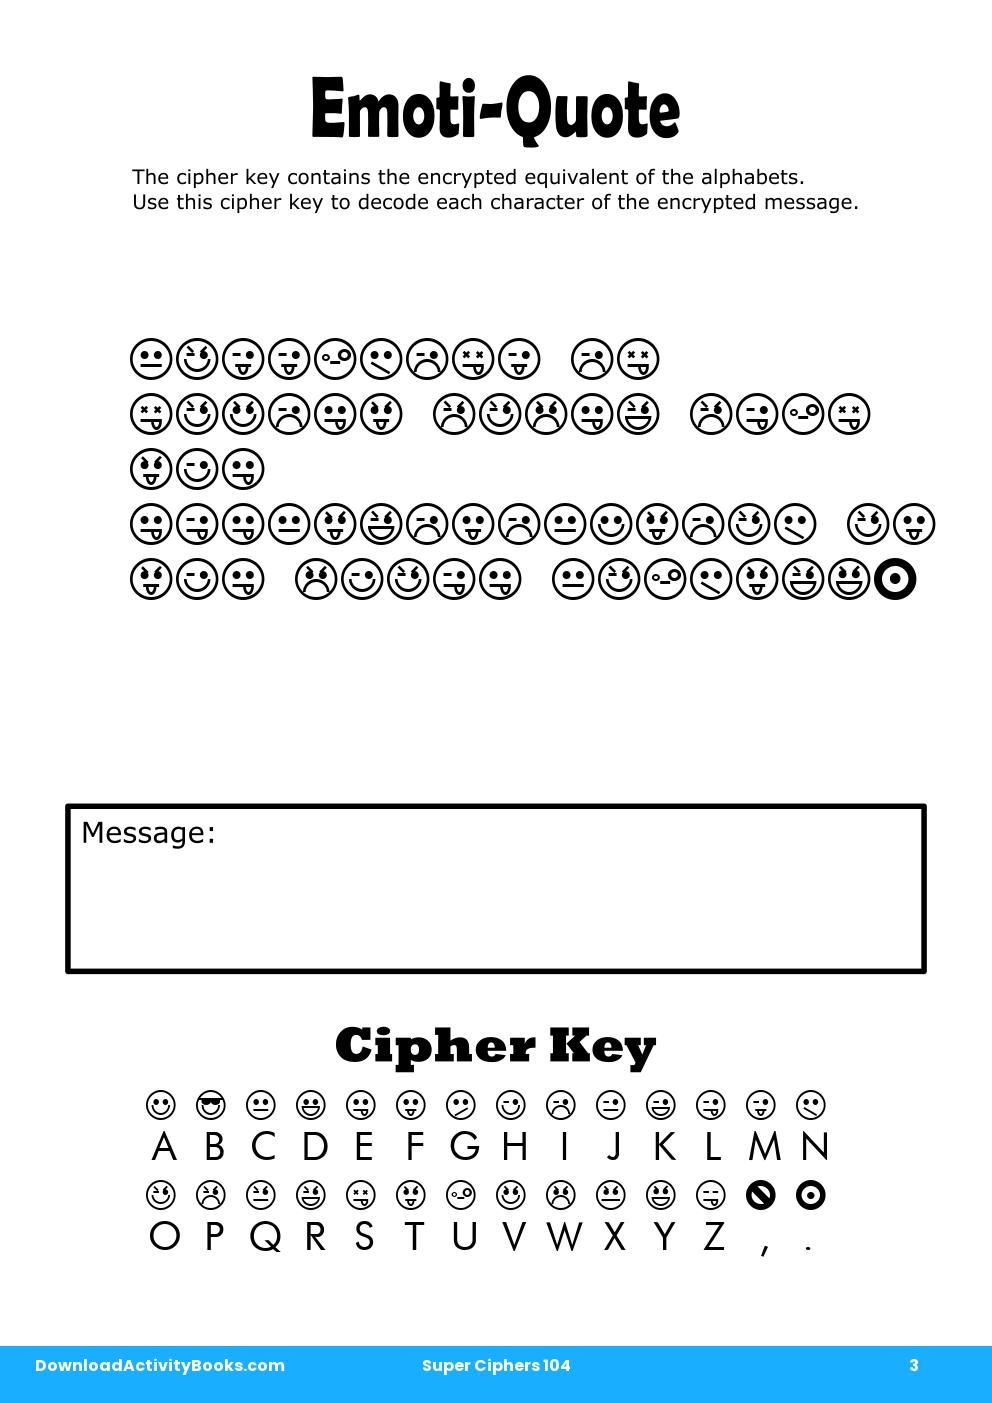 Emoti-Quote in Super Ciphers 104